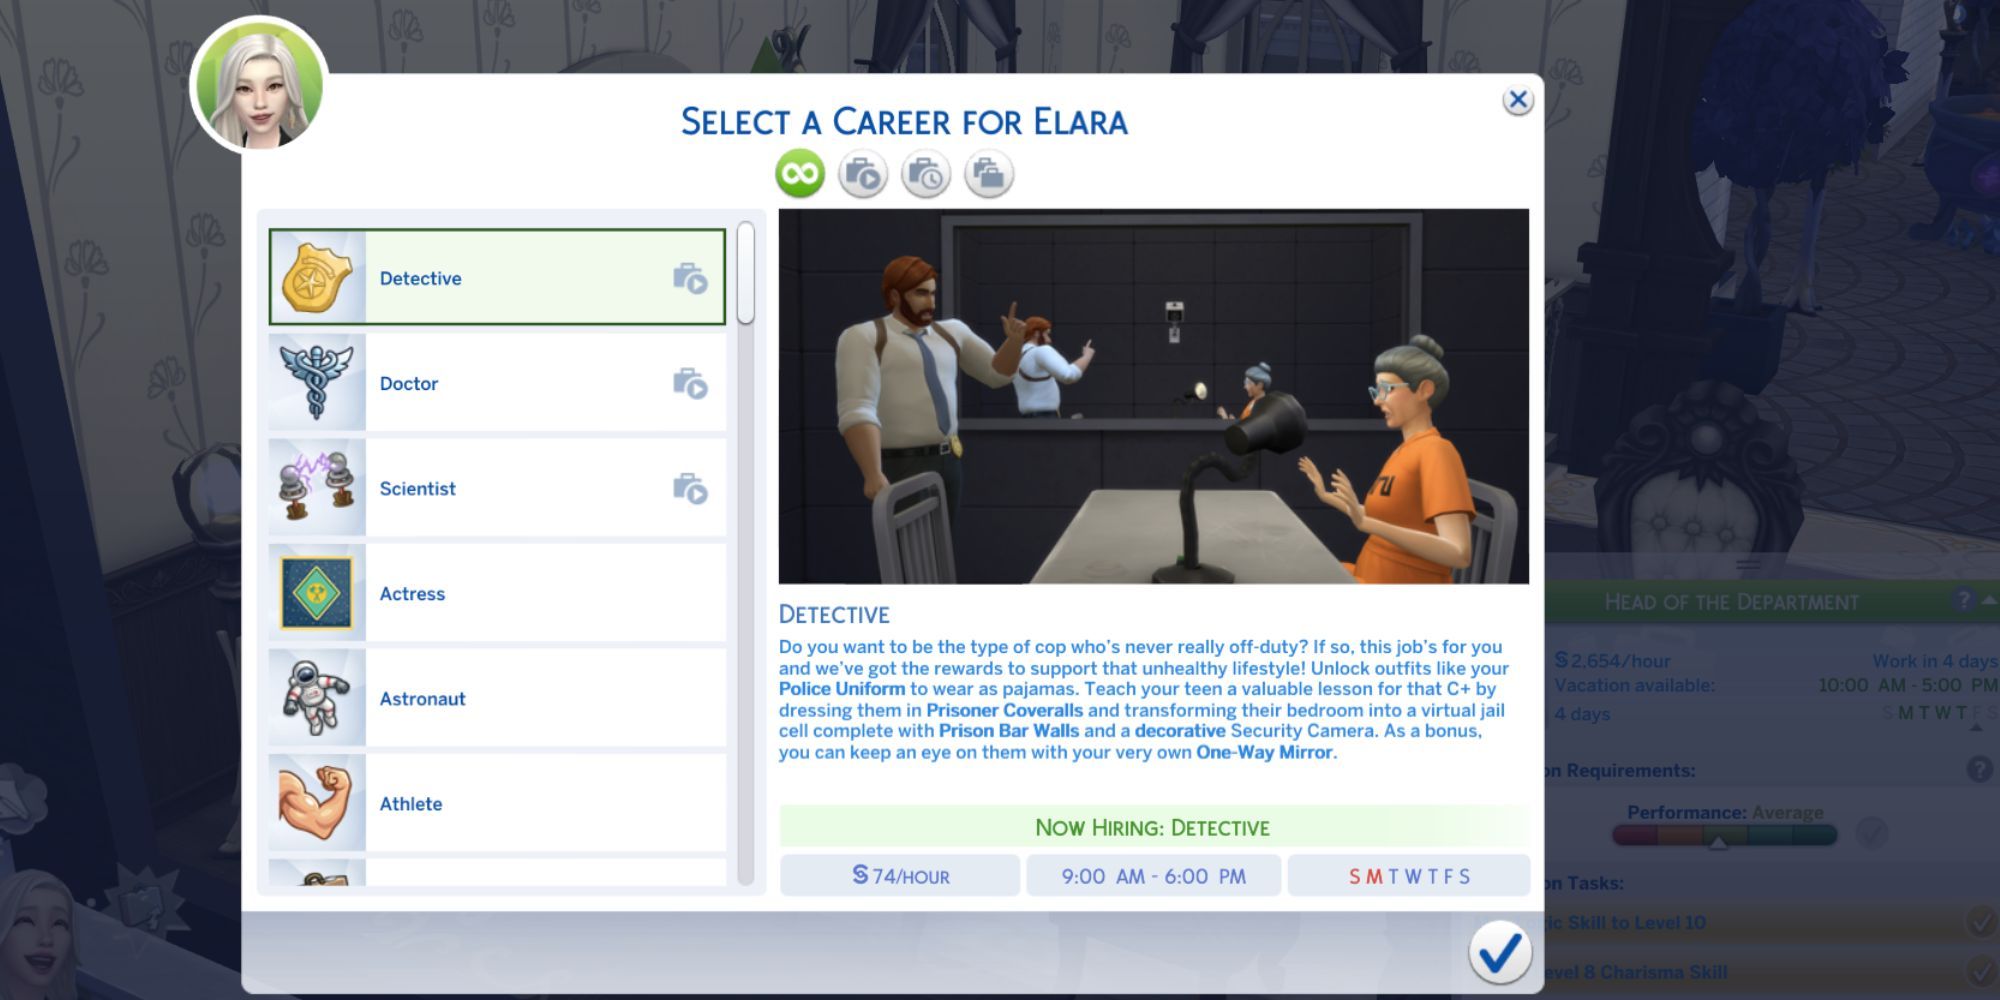 Gameplay, Cheats, Skill, and Career Guides at Carl's Sims 4 Guide